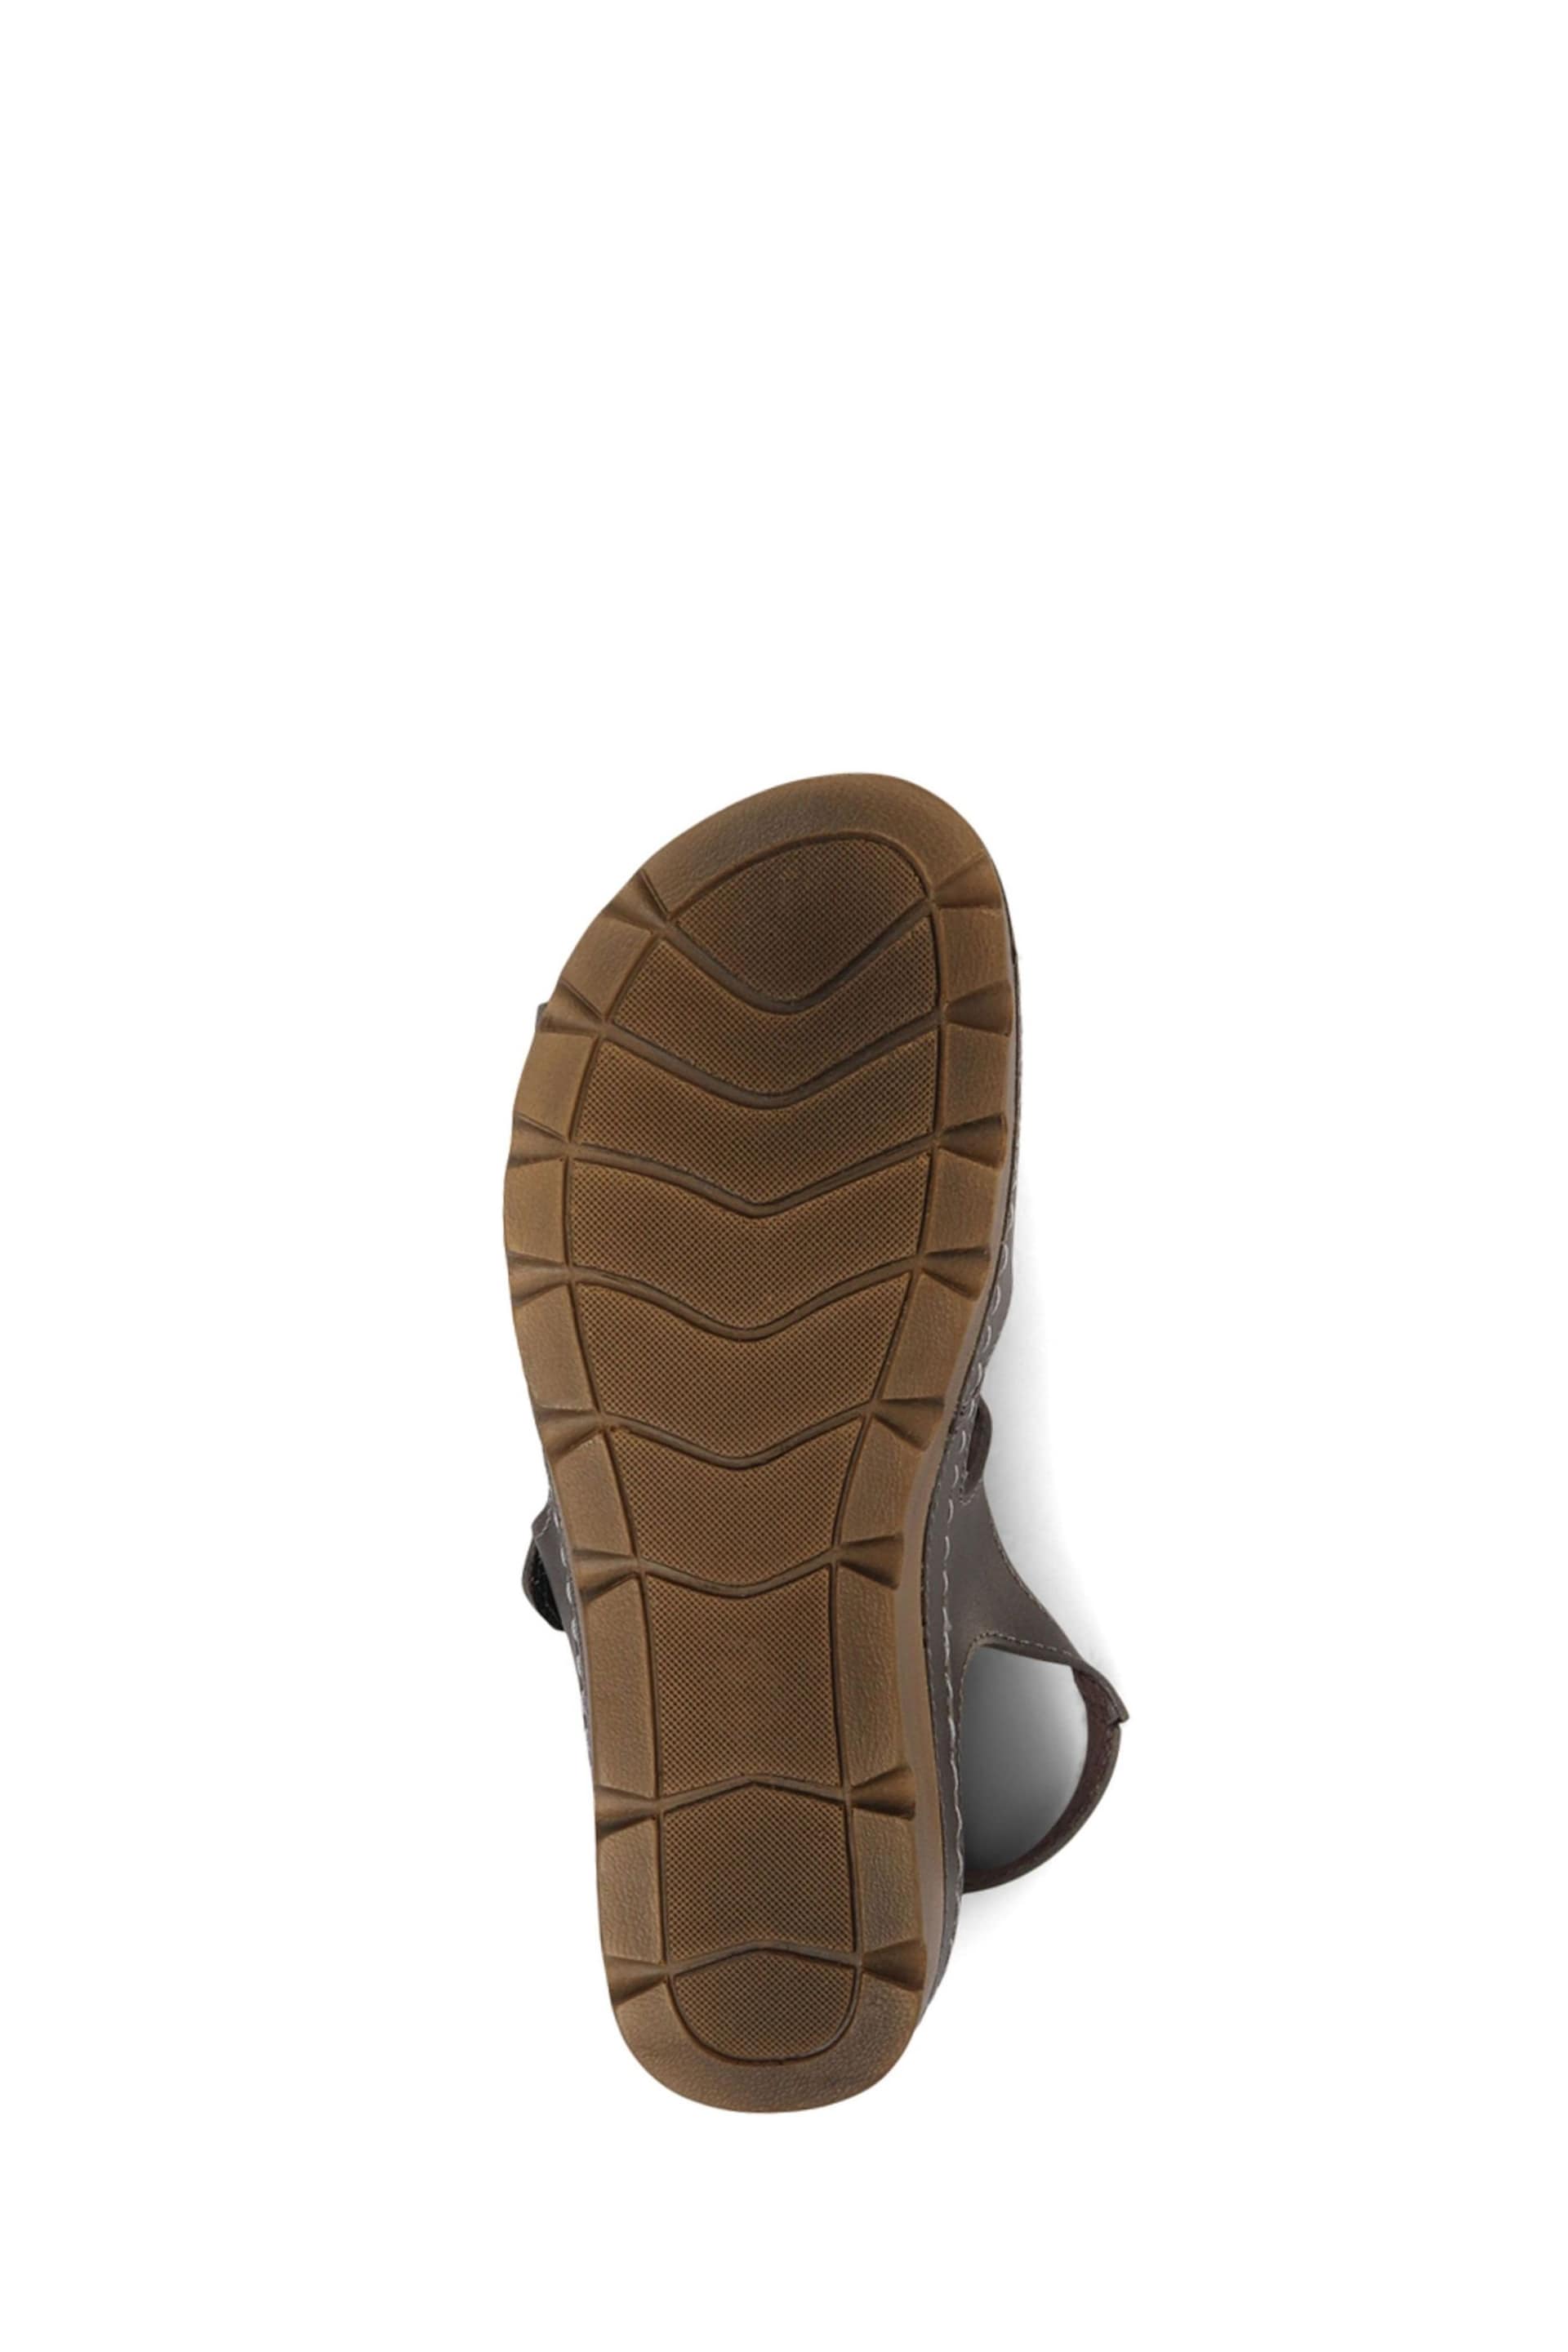 Pavers Adjustable Sandals - Image 5 of 5